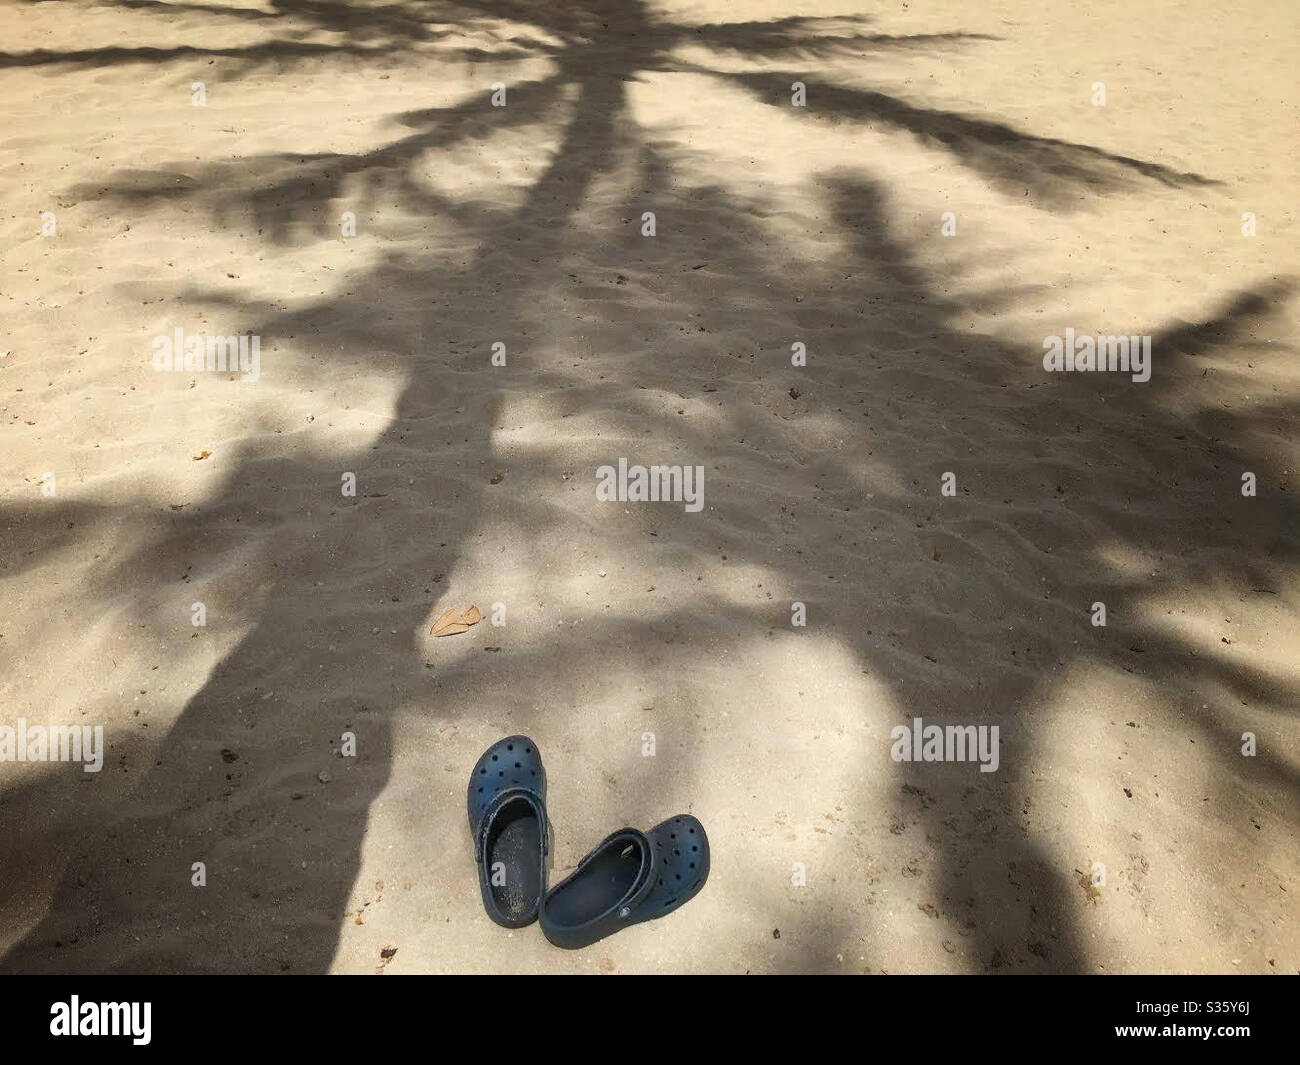 Palm tree shadows and a pair of Crocs on sand beach Stock Photo